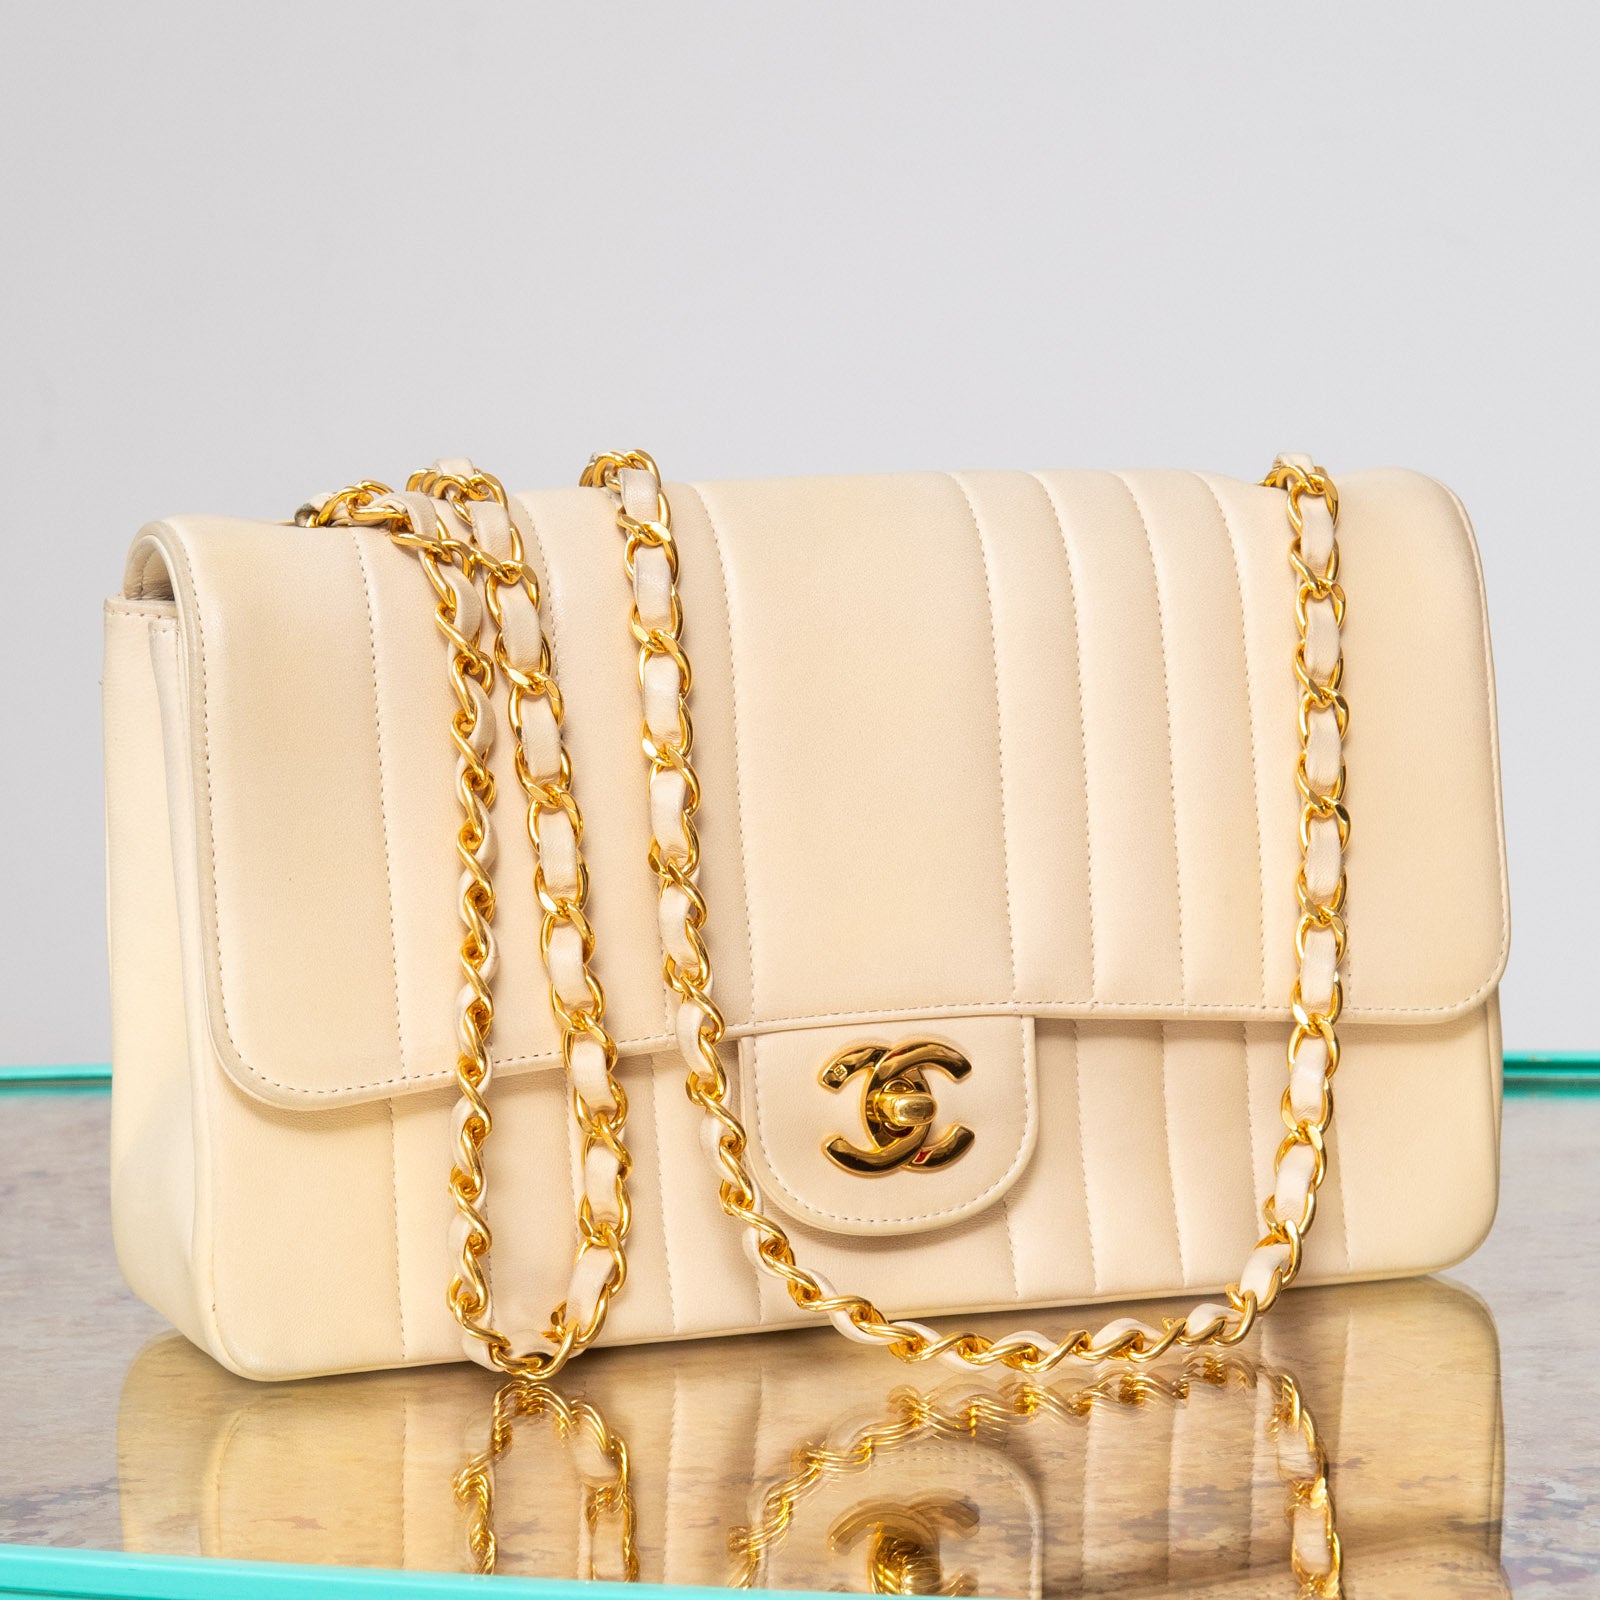 Chanel Jumbo Classic Flap Beige Clair Caviar Gold Hardware - Luxury Shopping